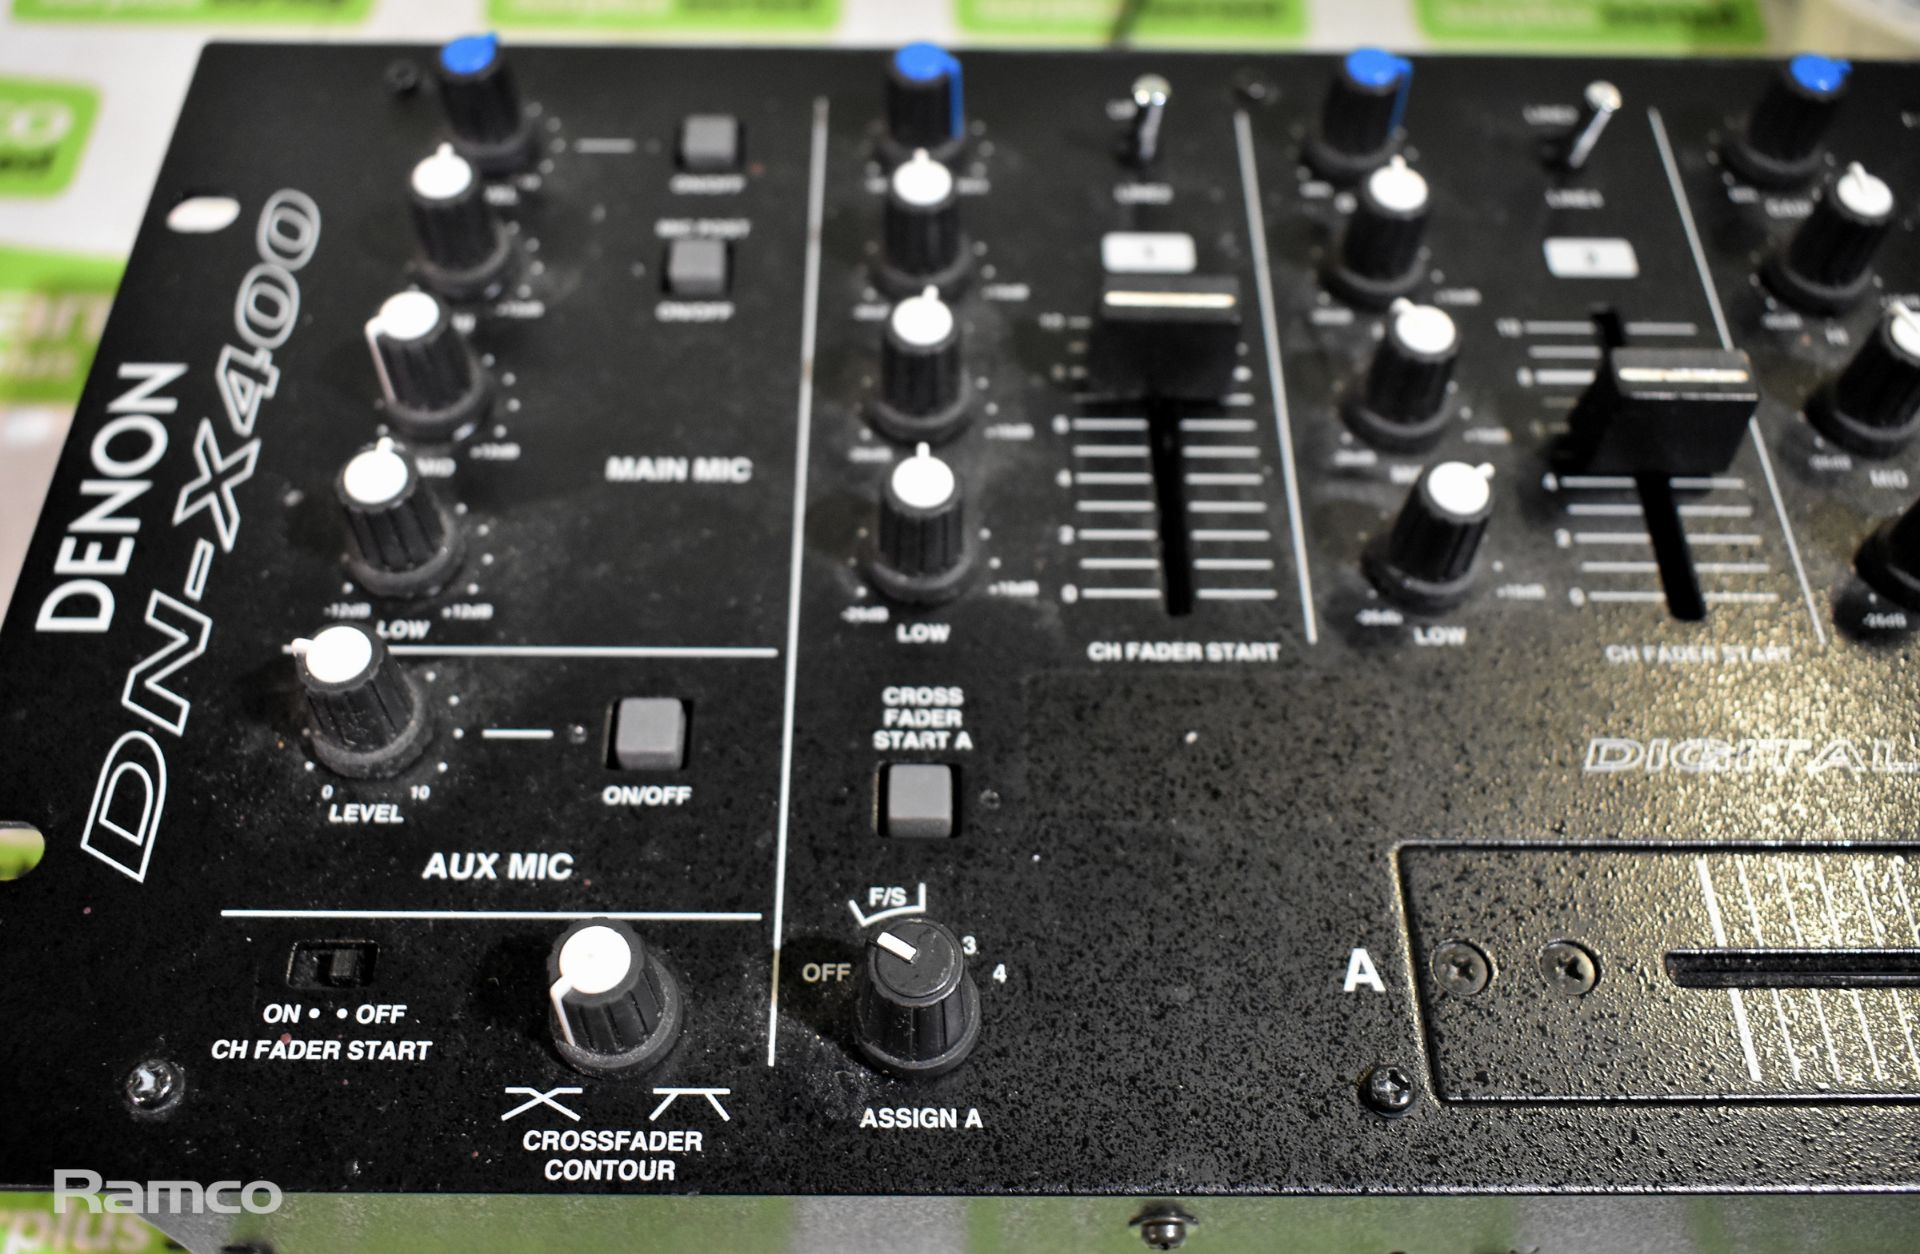 360 Systems SC-182 Shortcut personal audio editor, Denon DN-X400 4 channel DJ mixer - Image 3 of 19